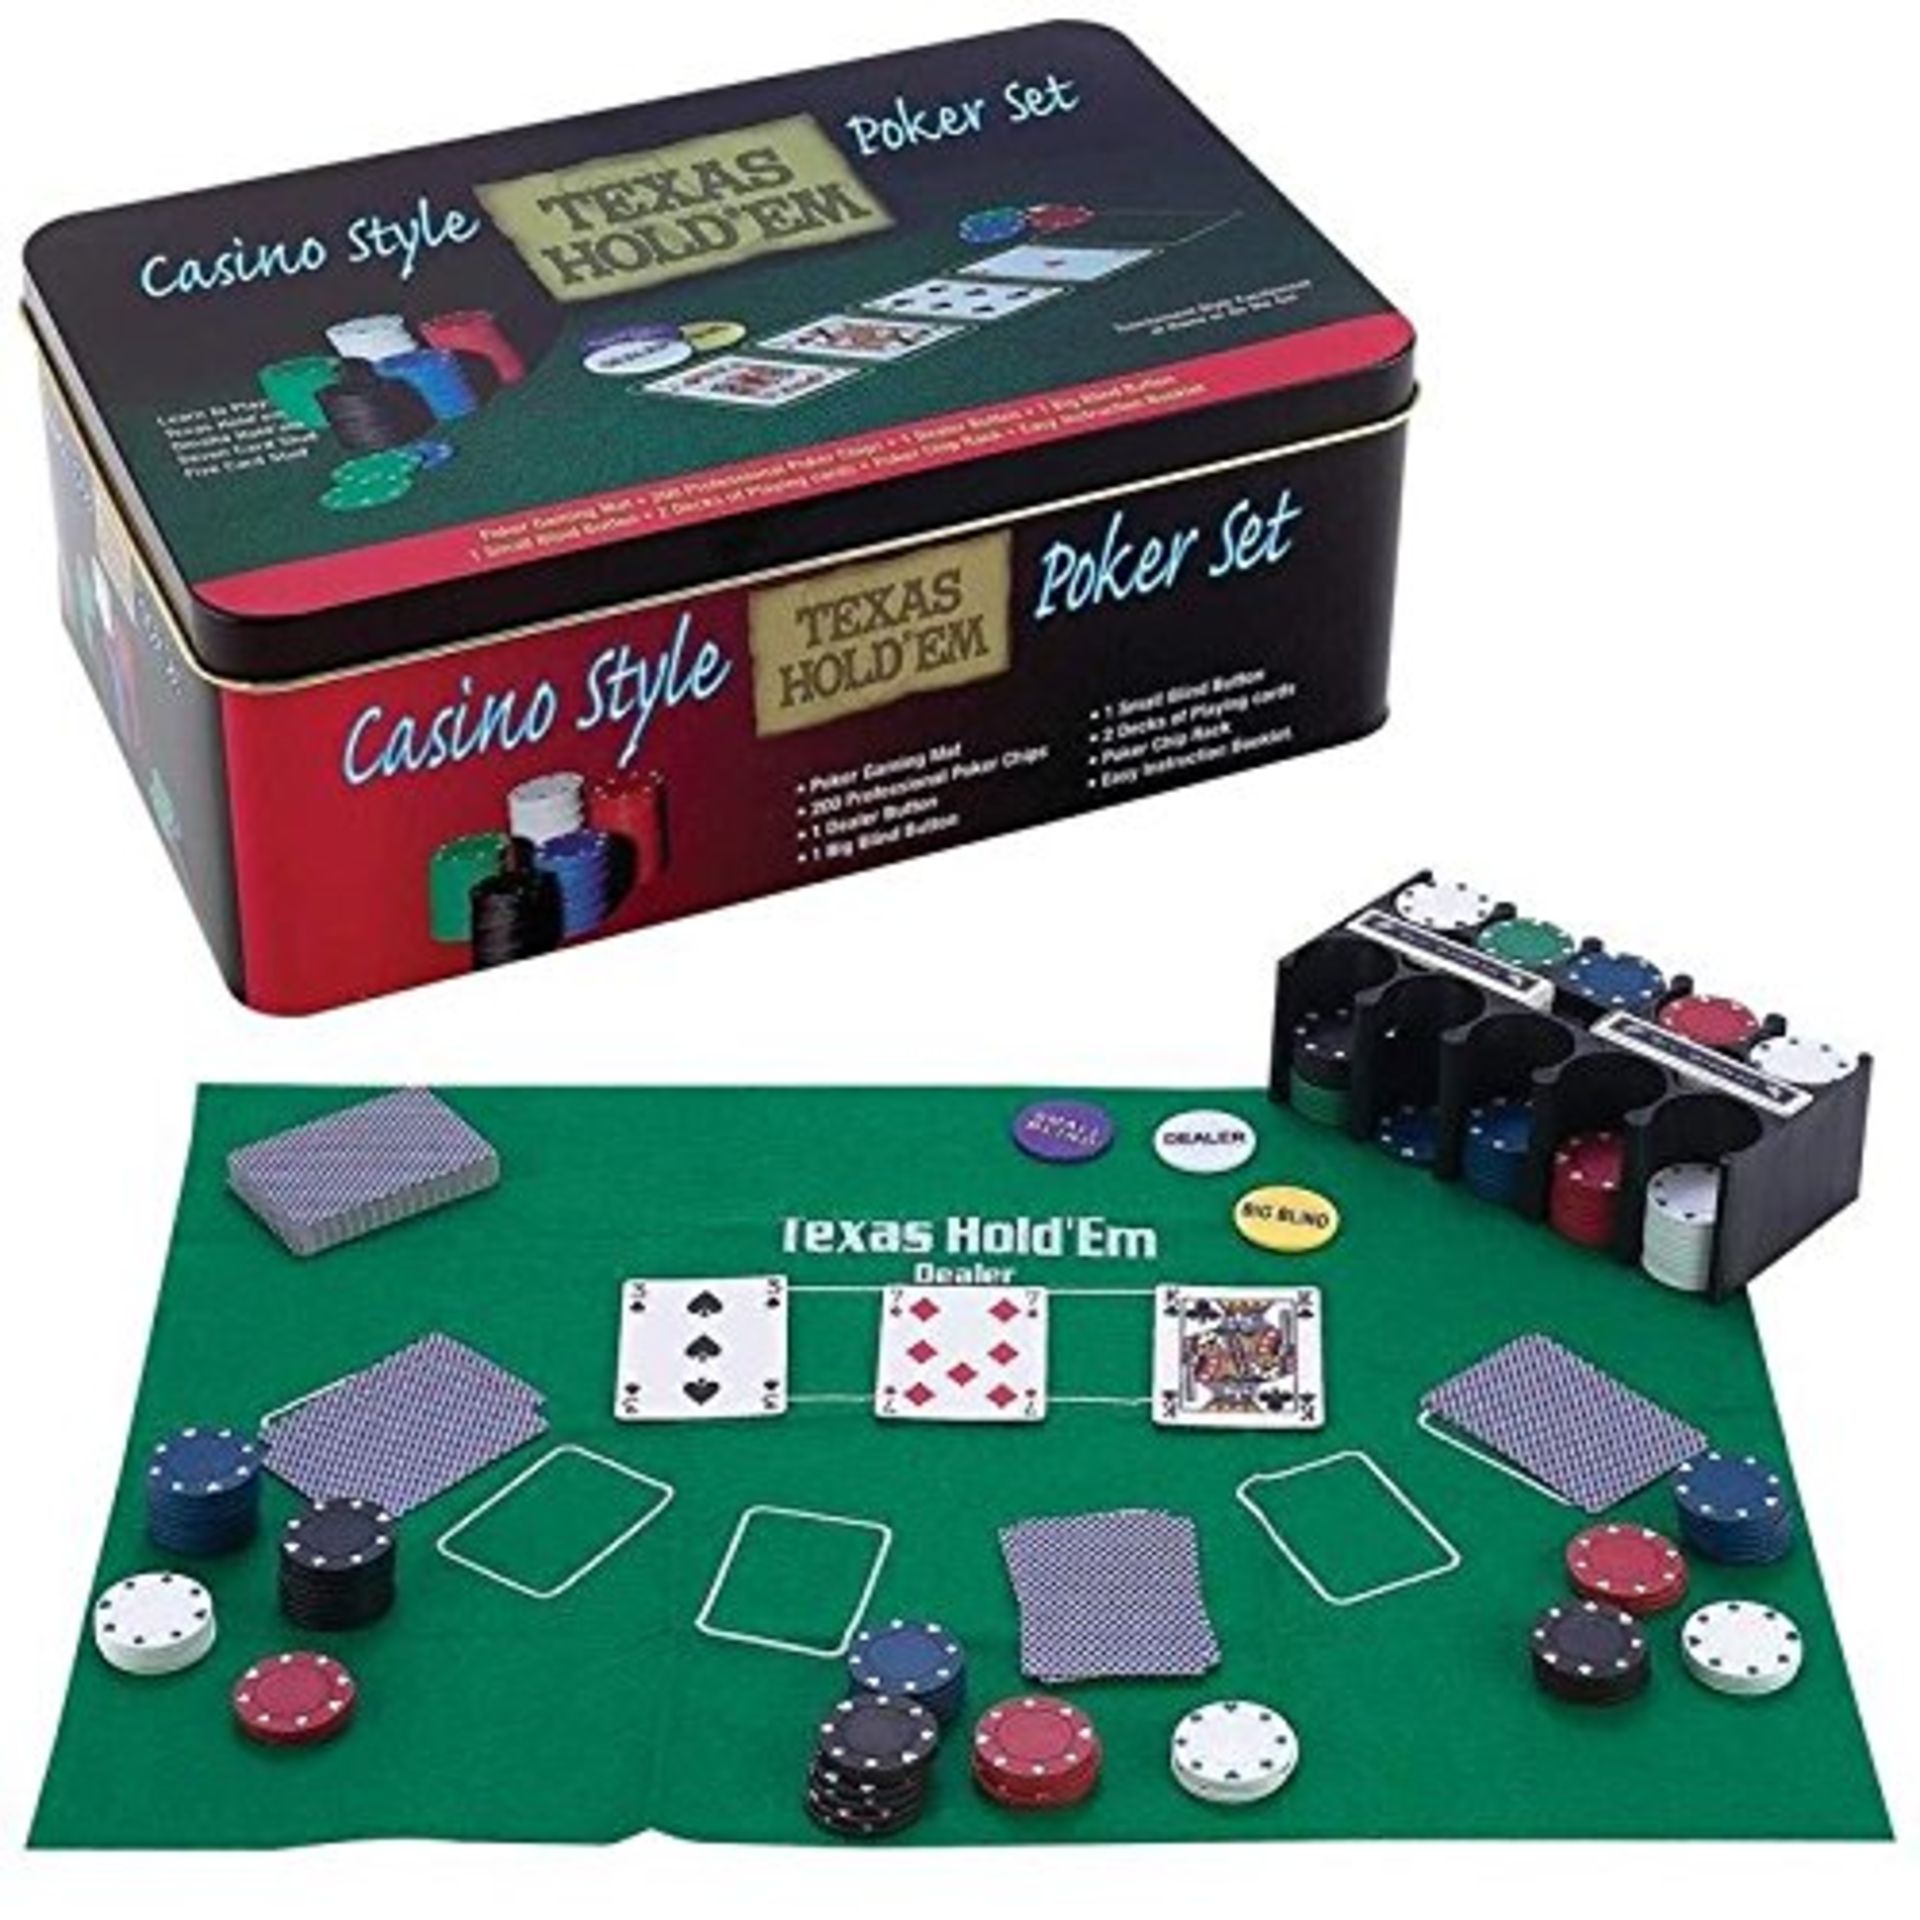 V *TRADE QTY* Brand New Texas Holdem Casino Style Poker Set Including - Poker Gaming Mat - 200